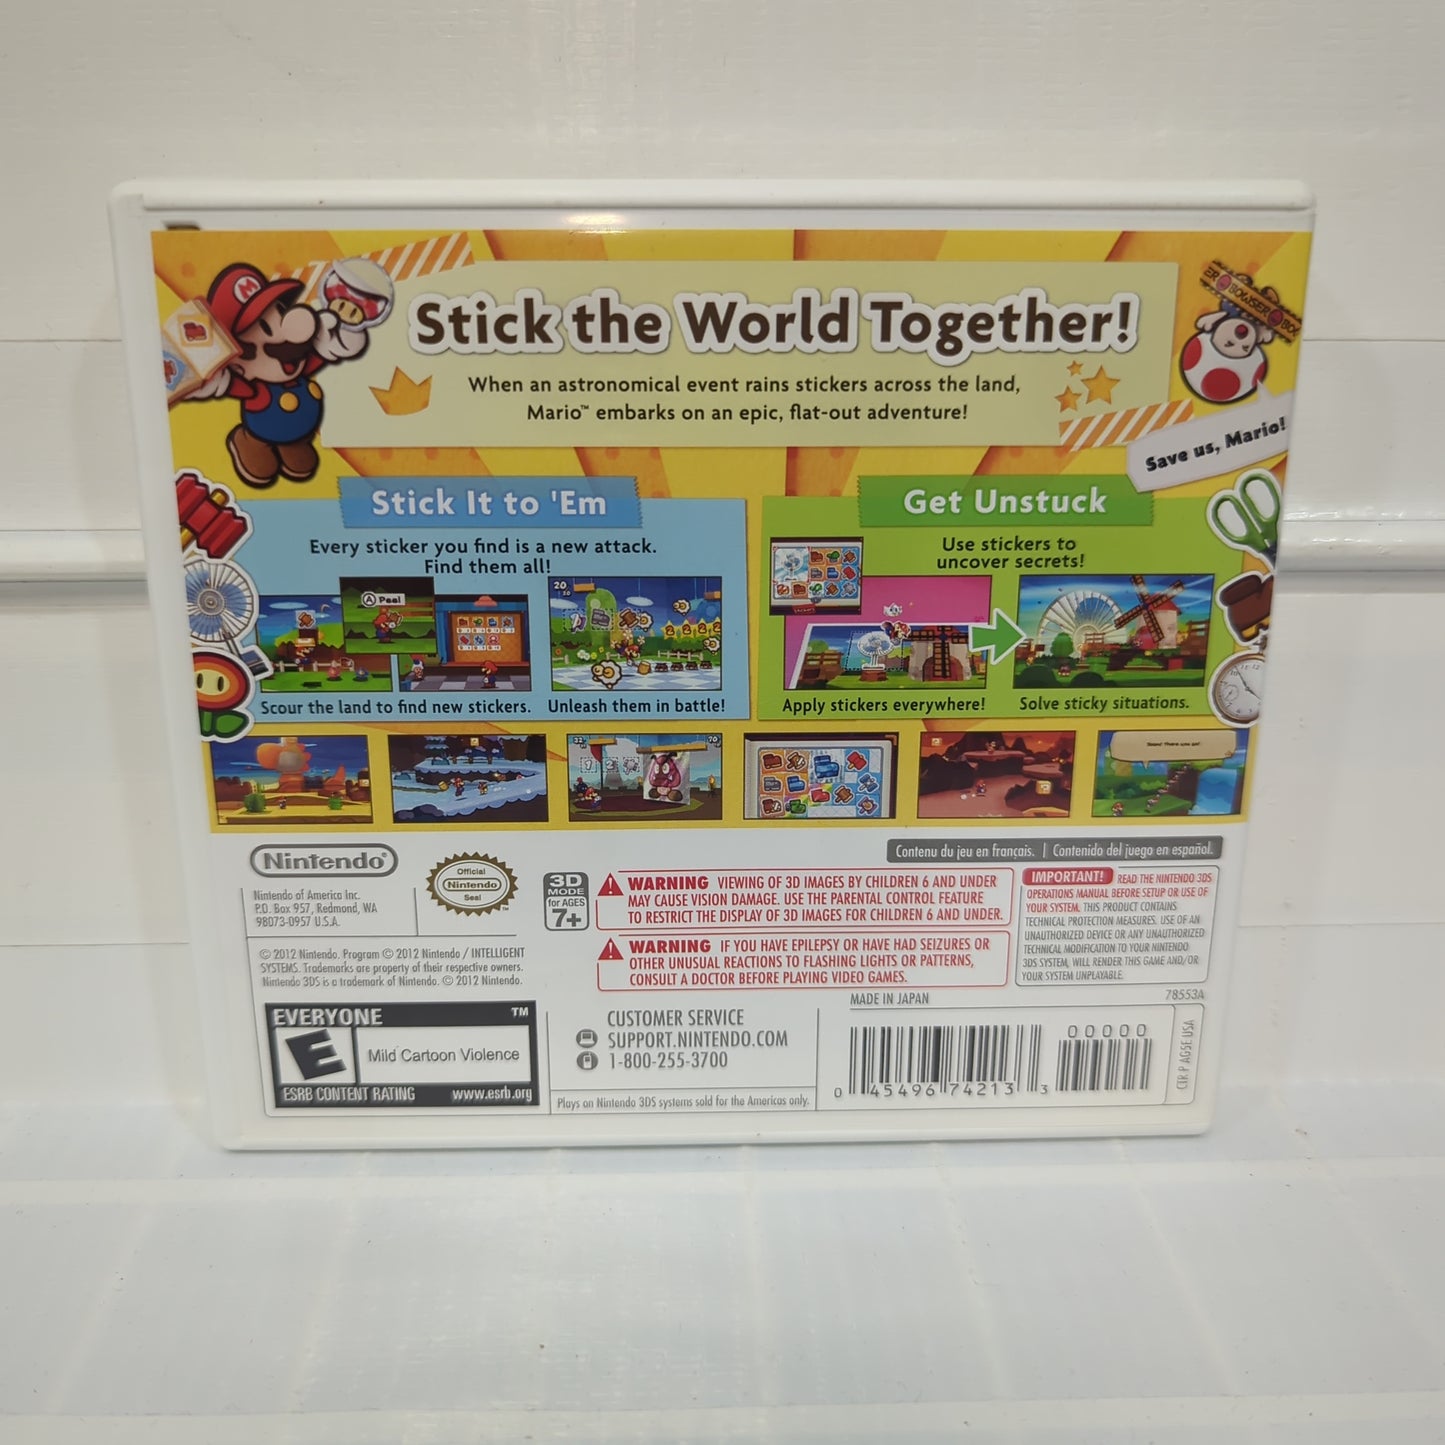 Paper Mario: Sticker Star - Nintendo 3DS